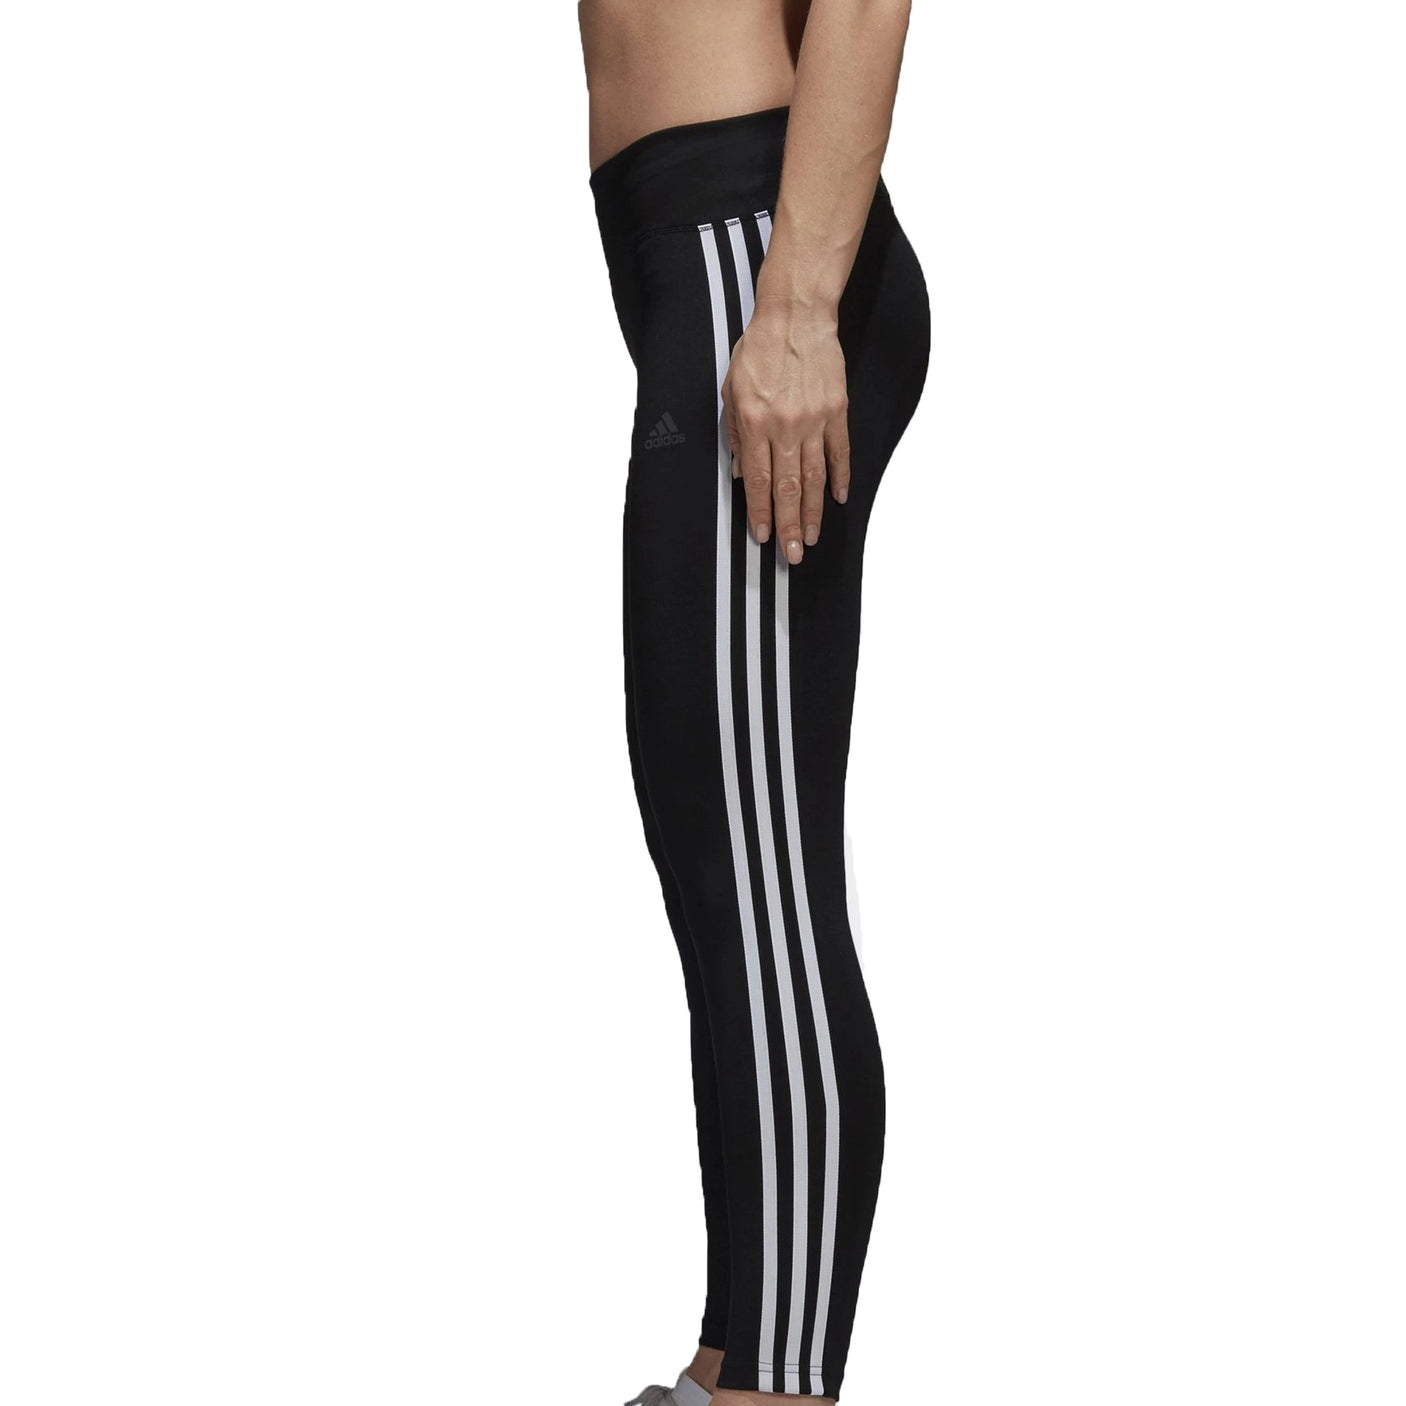 adidas Women's Design 2 Move ClimaLite 3-Stripes Tights Black/White